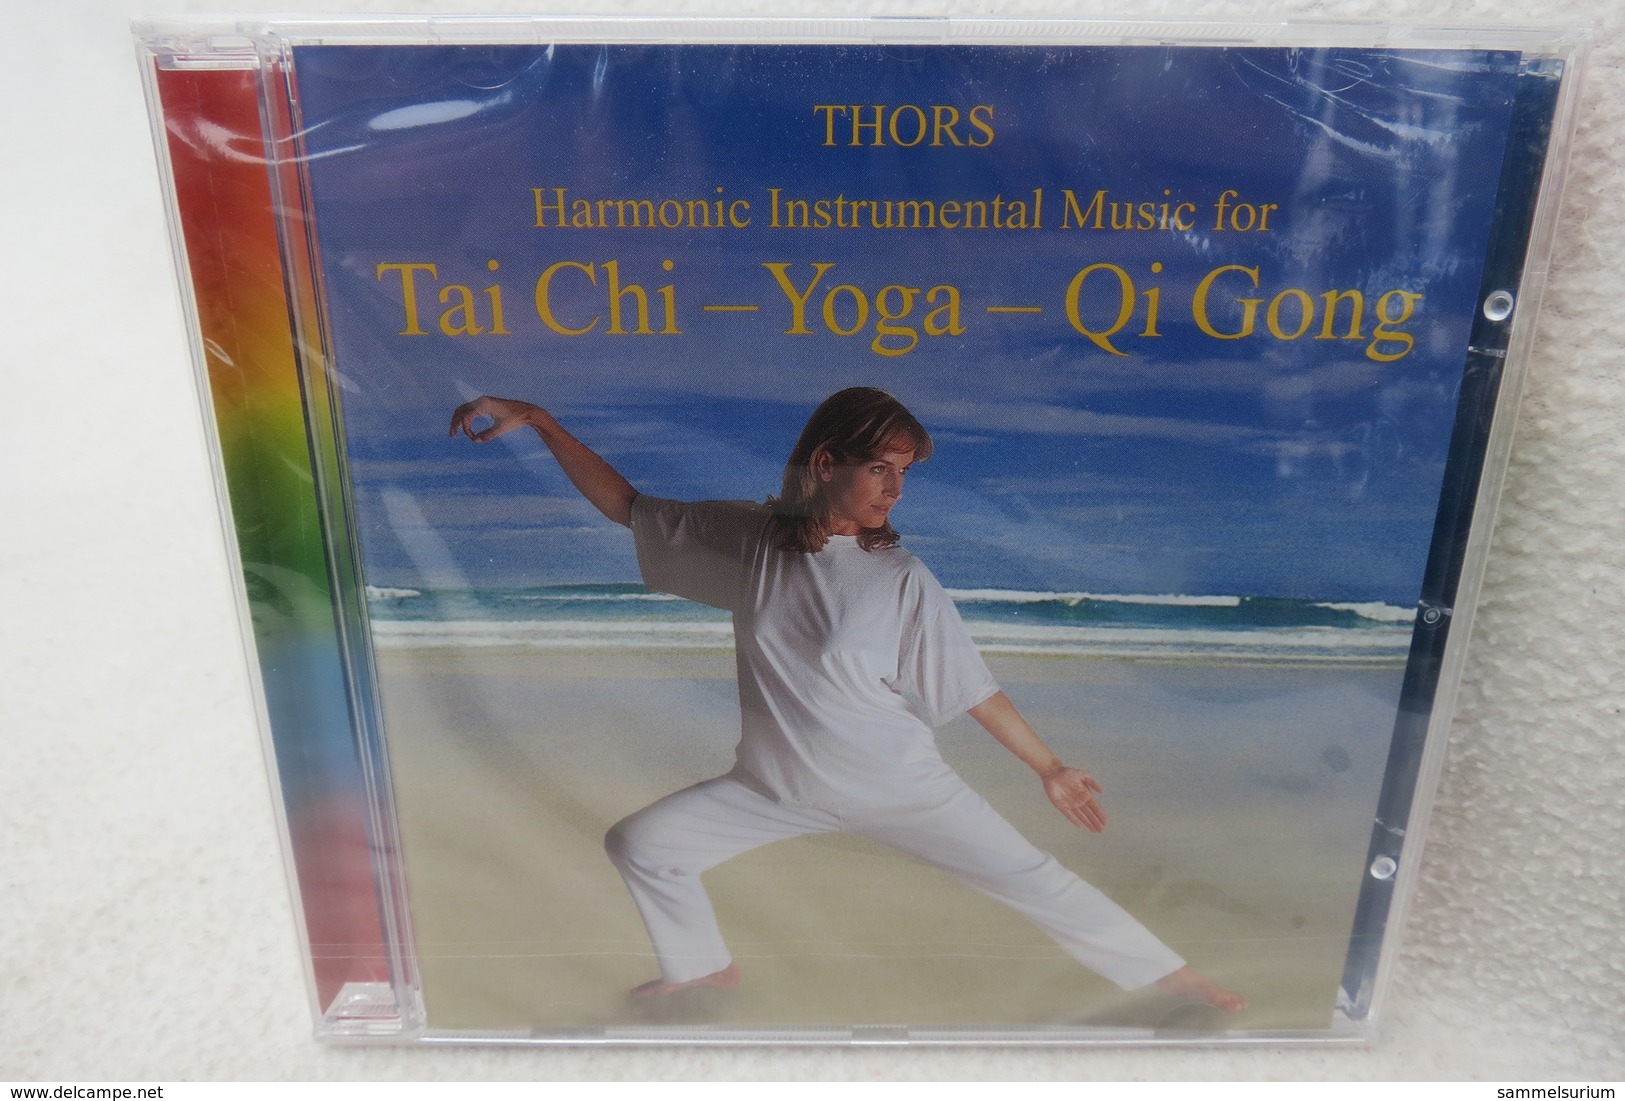 CD "Thors" Tai Chi - Yoga - Qi Gong" Harmonic Instrumental Music (noch Orig. Eingeschweißt) - Instrumental